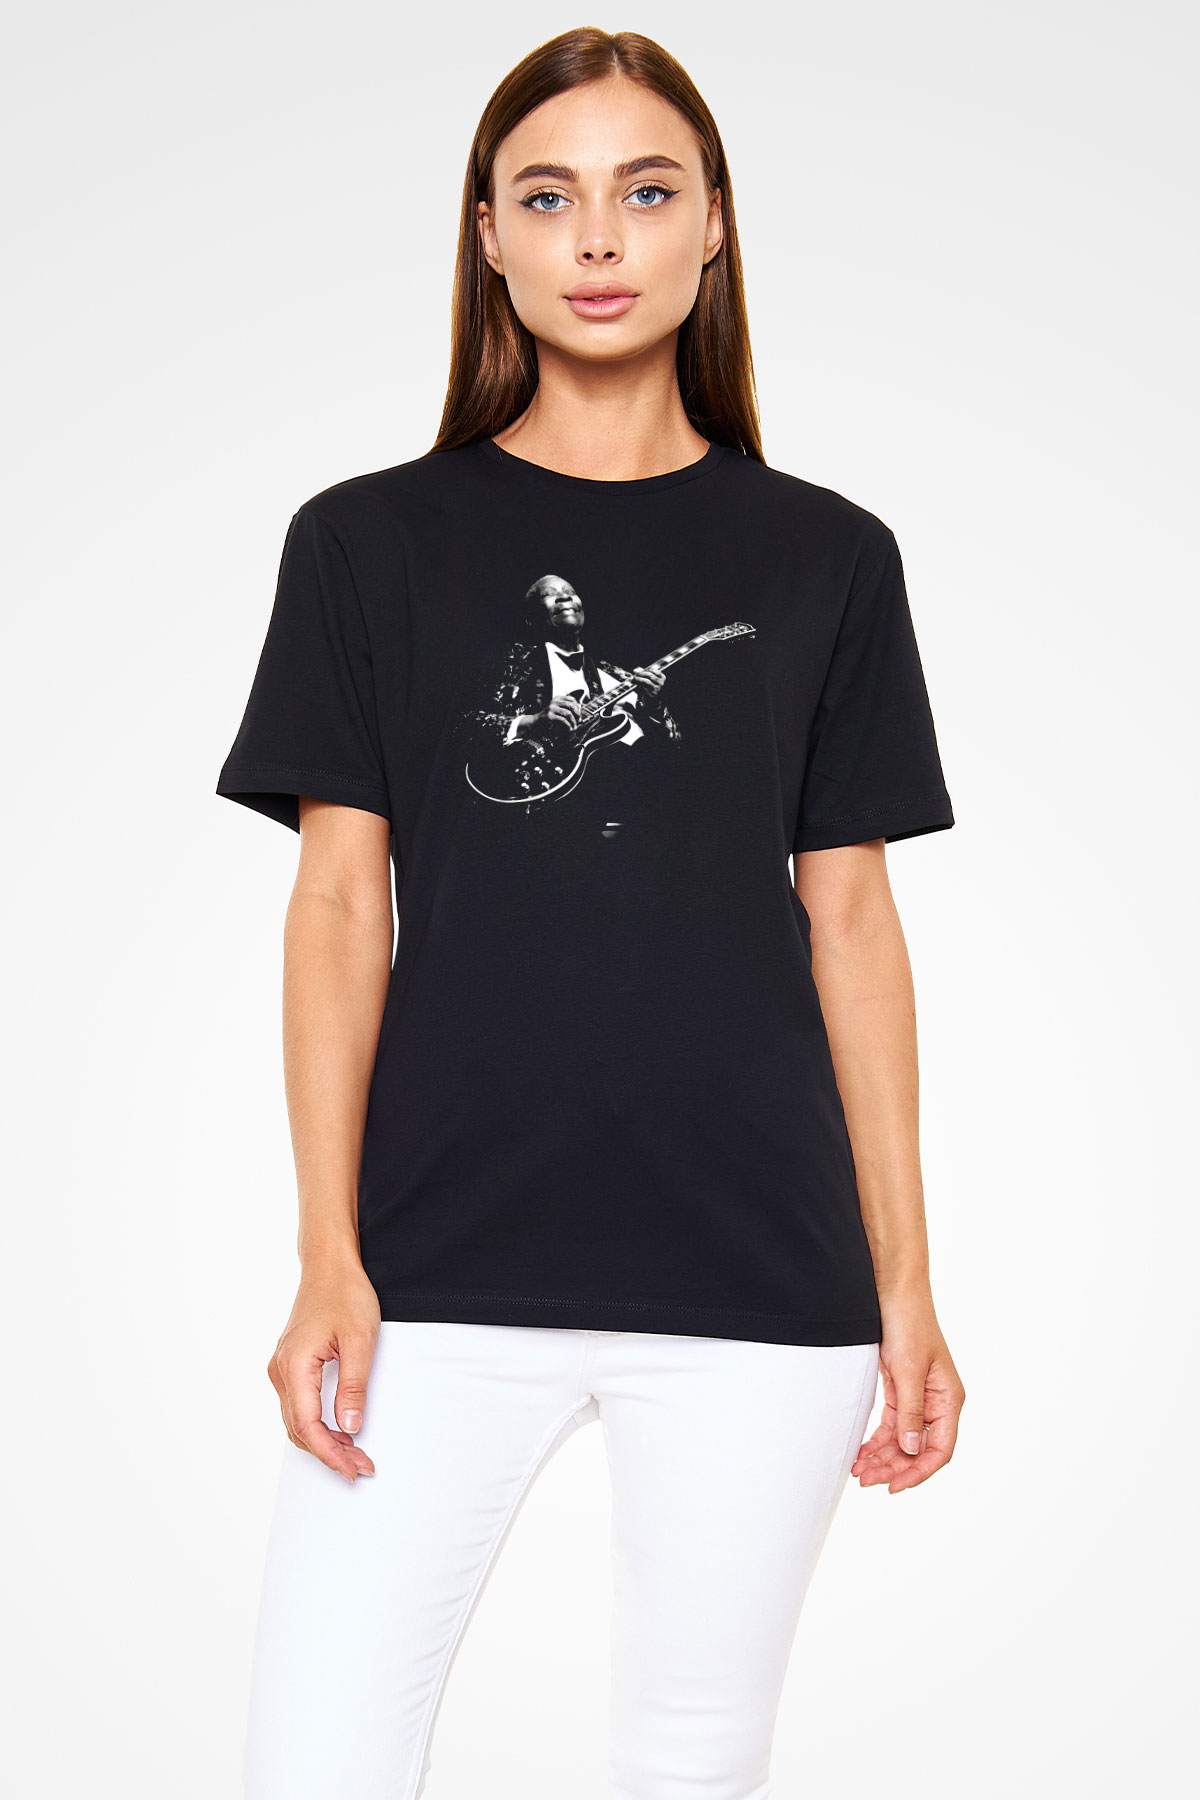 Bleach schilderij portret van BB King op een zwarte maat 5XL shirt. Kleding Gender-neutrale kleding volwassenen Tops & T-shirts T-shirts T-shirts met print 